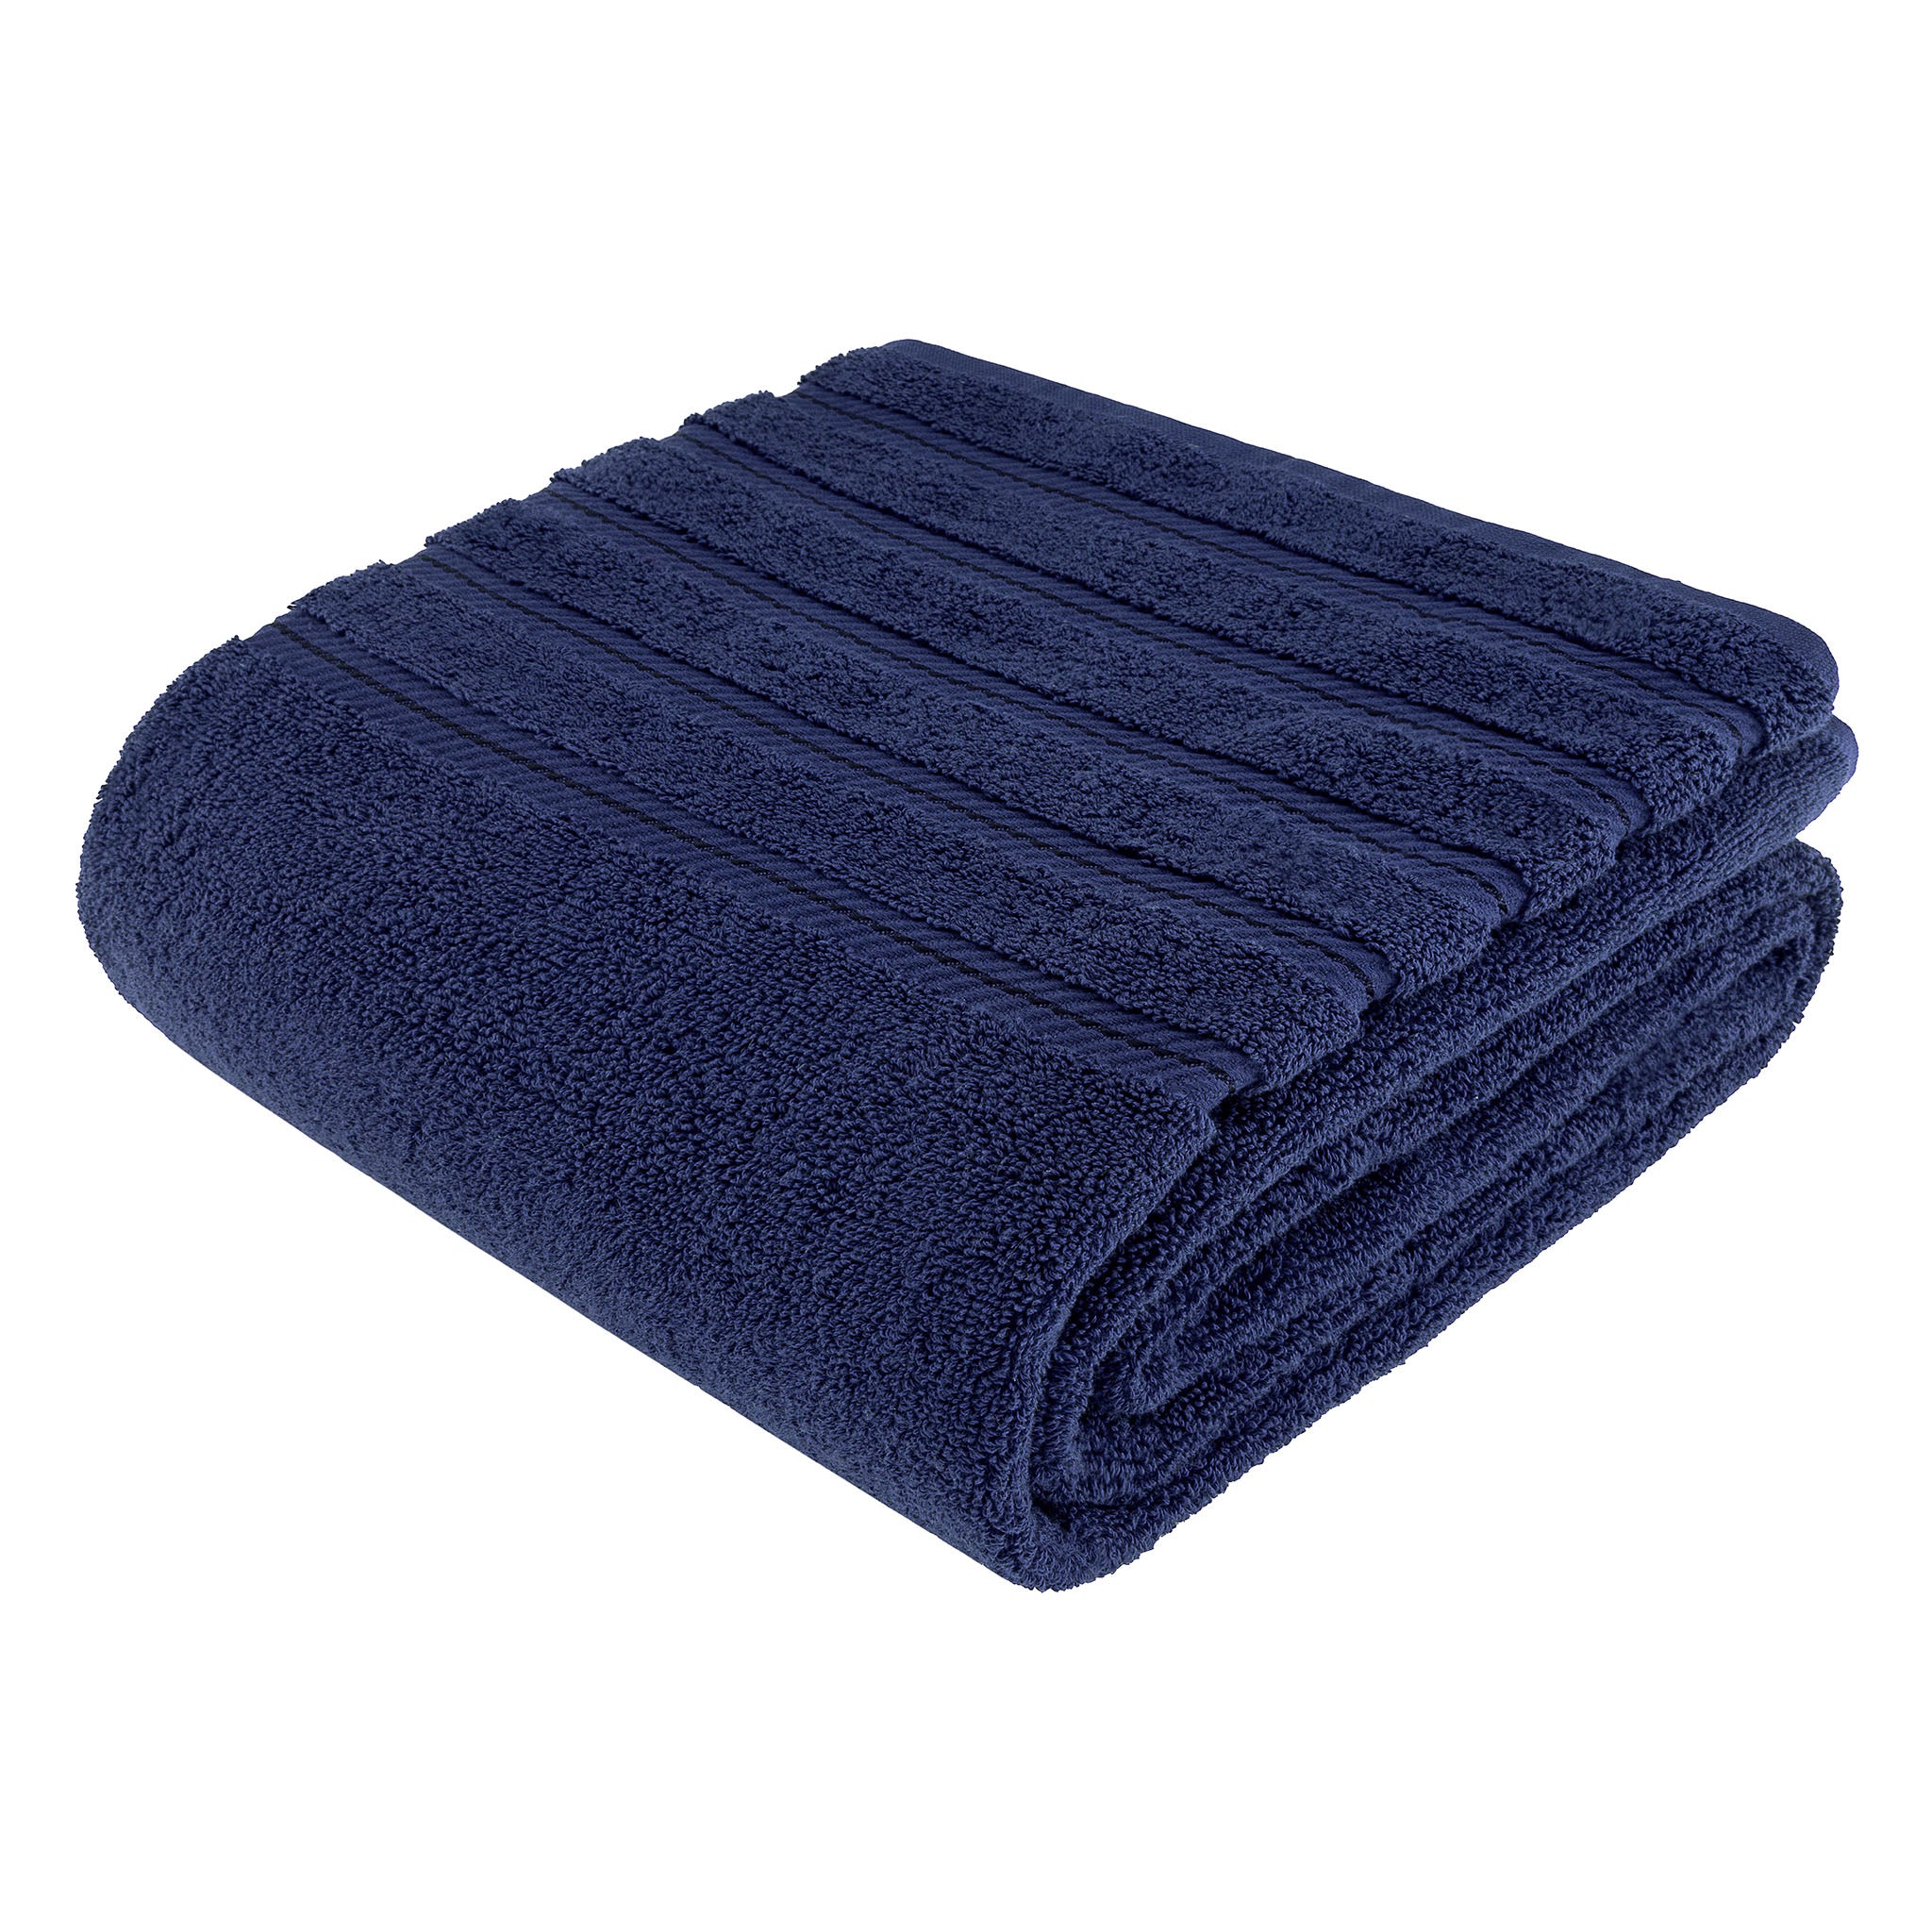 American Soft Linen 35x70 Inch 100% Turkish Cotton Jumbo Bath Sheet navy-blue-7